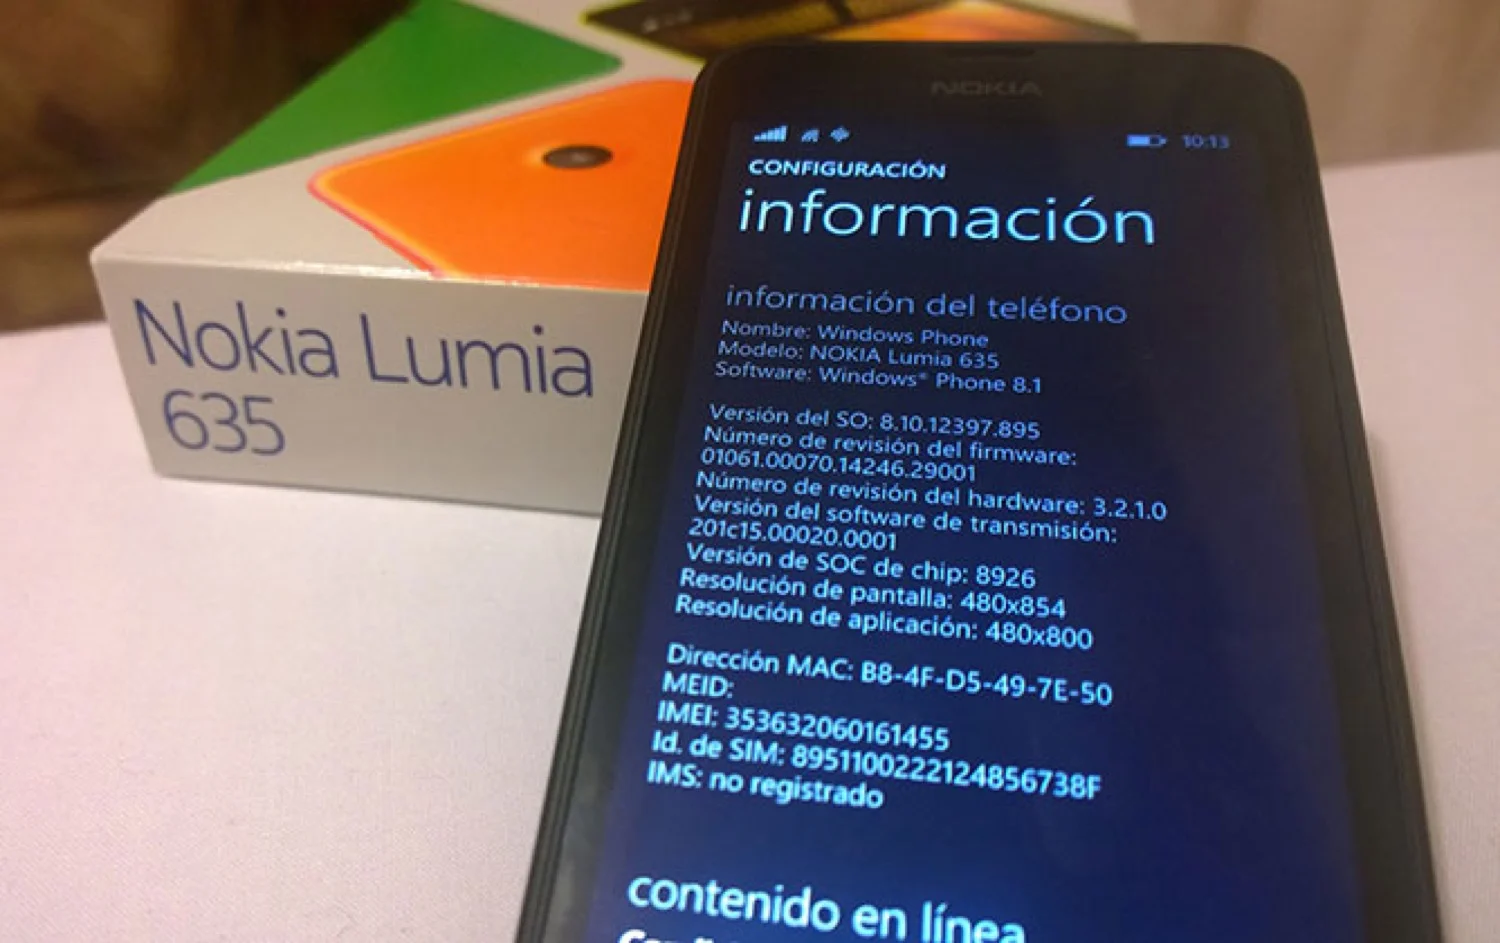 Review del smartphone Nokia Lumia 635